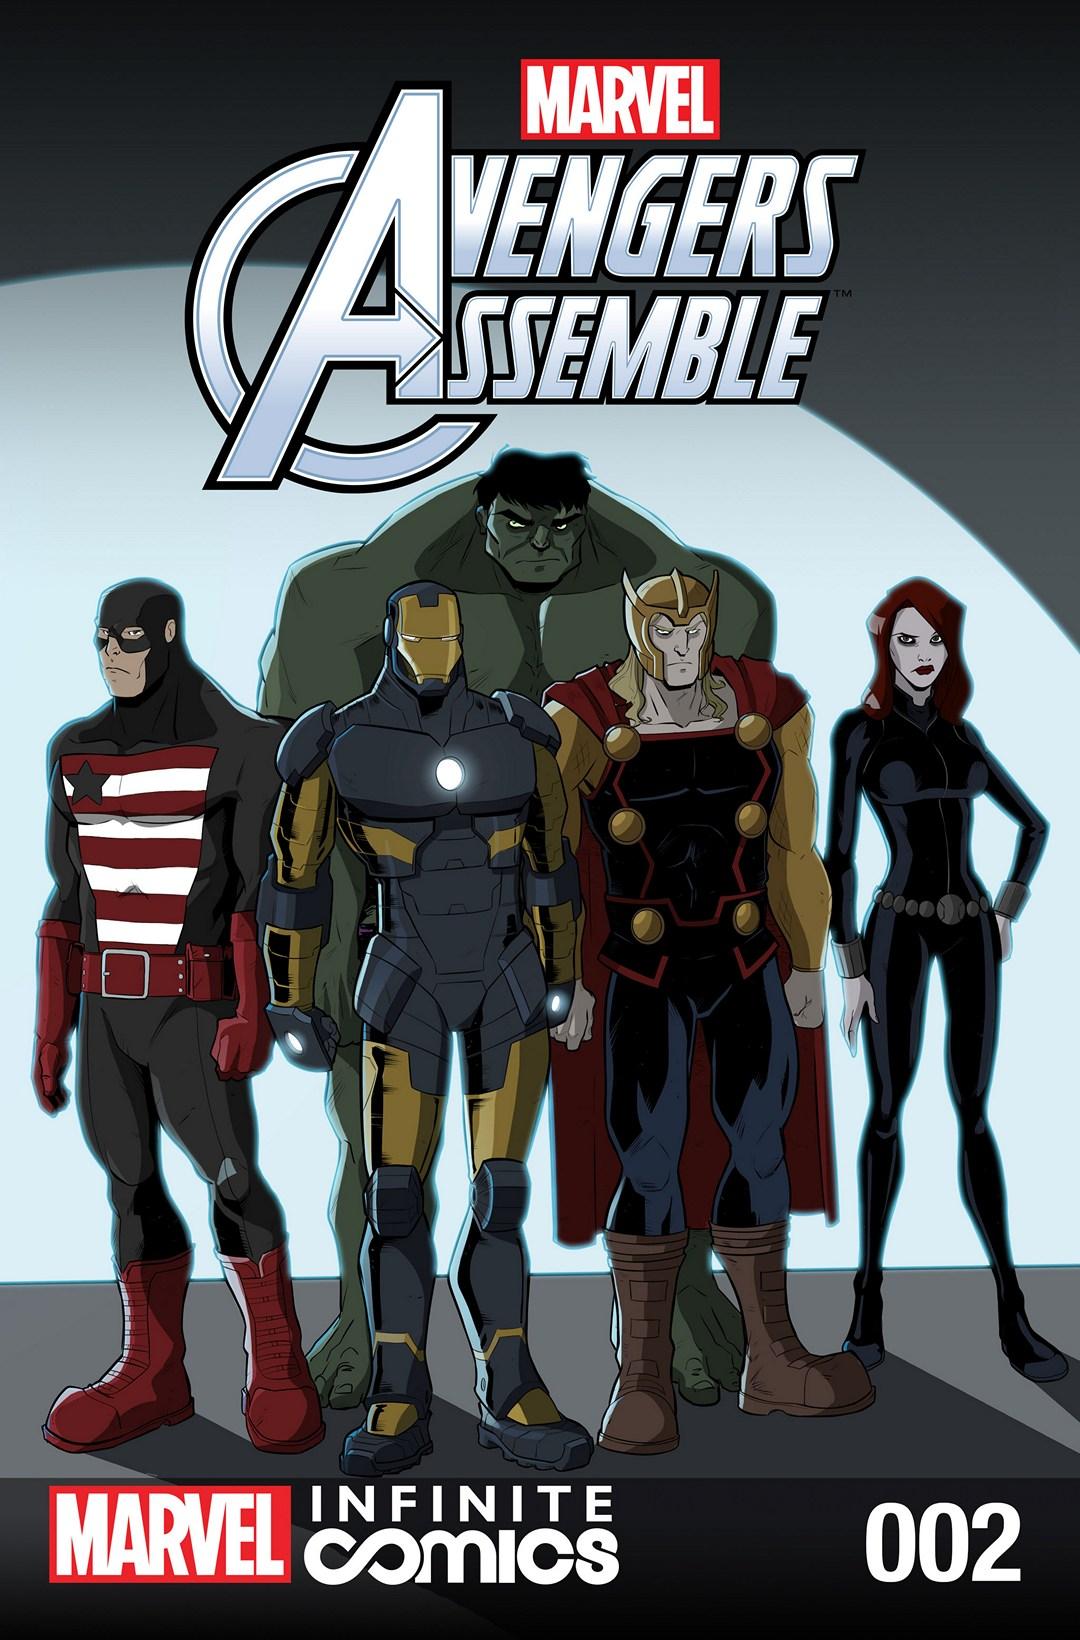 Marvel Universe Avengers Infinite Comic Vol. 1 #2